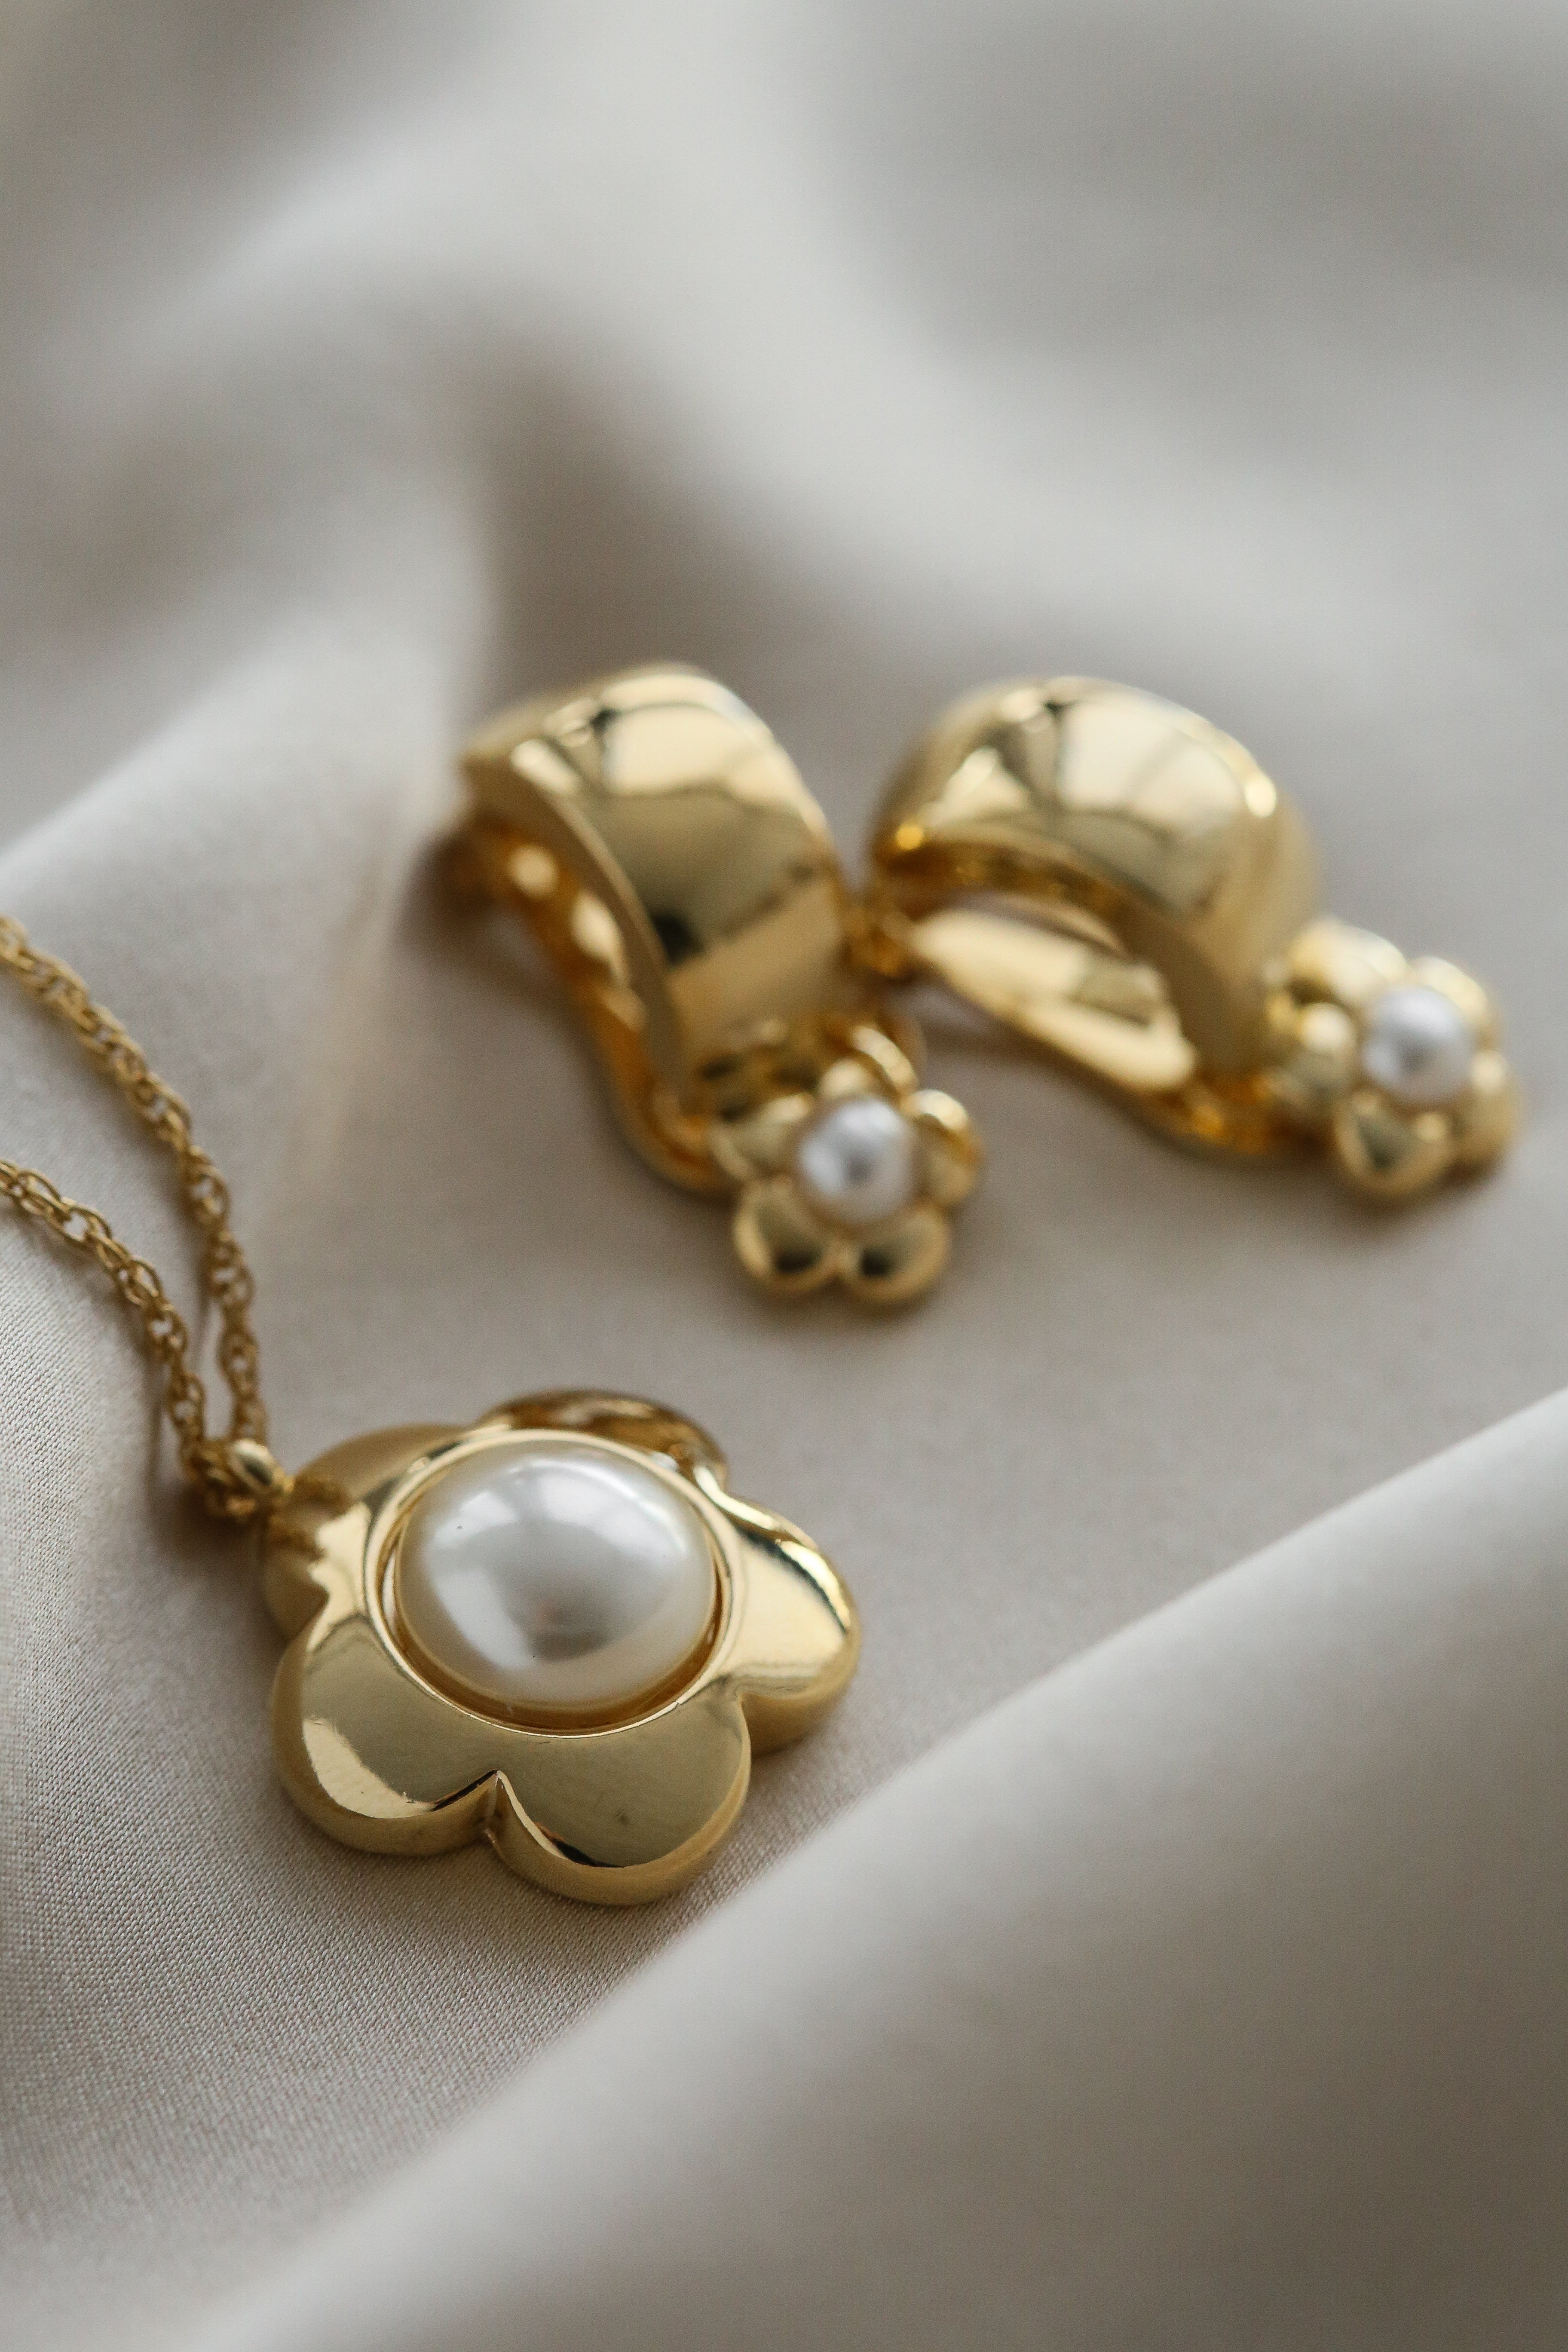 Venice (Vintage) Earrings - Boutique Minimaliste has waterproof, durable, elegant and vintage inspired jewelry